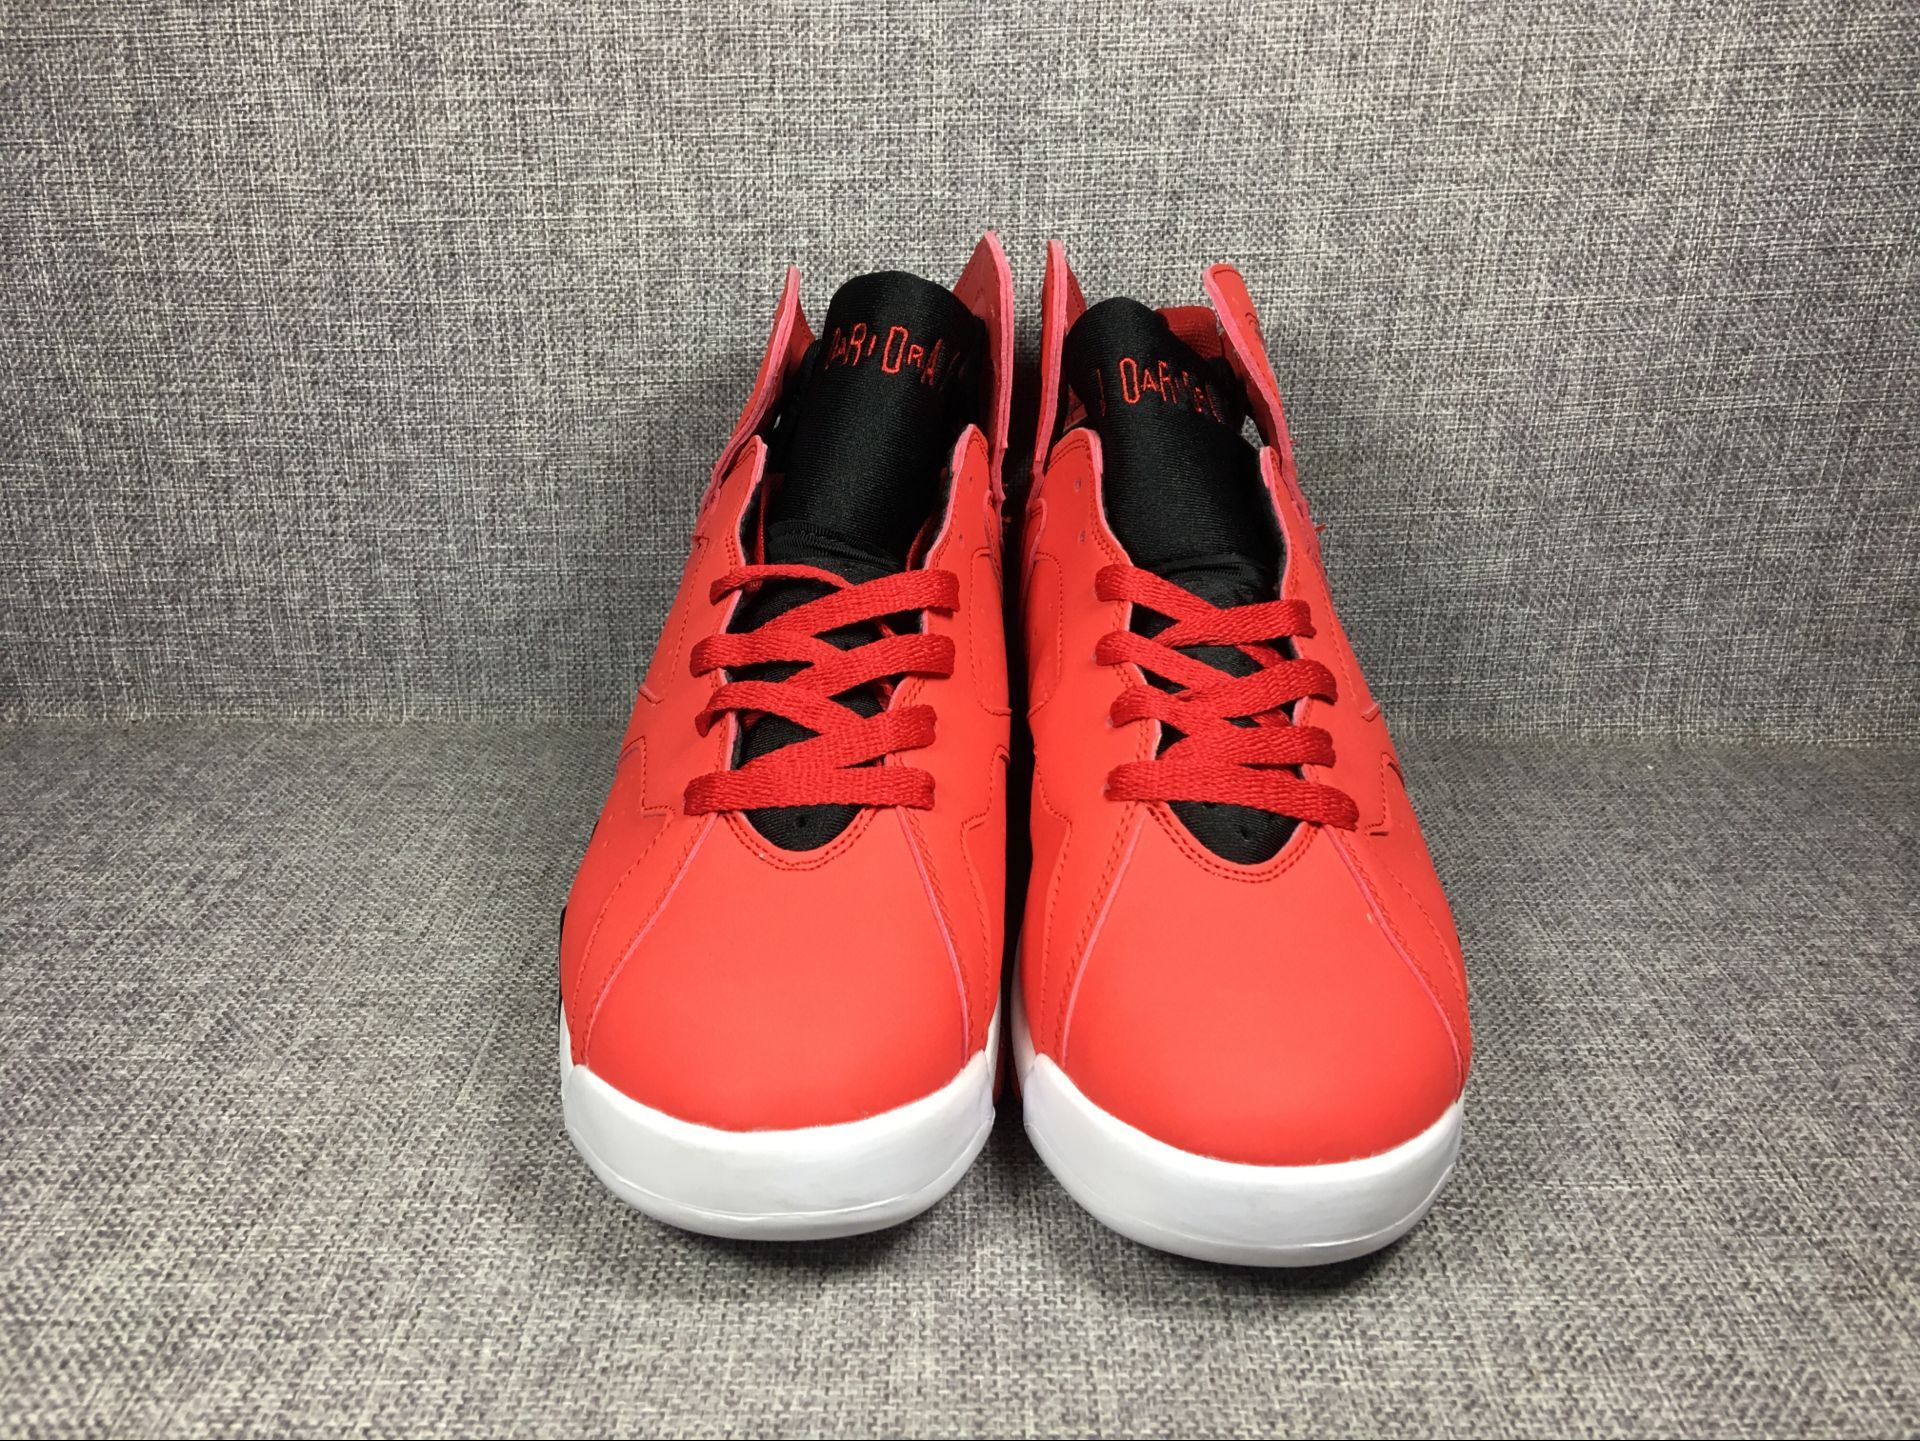 New Air Jordan 7 Retro Red Black White Shoes - Click Image to Close